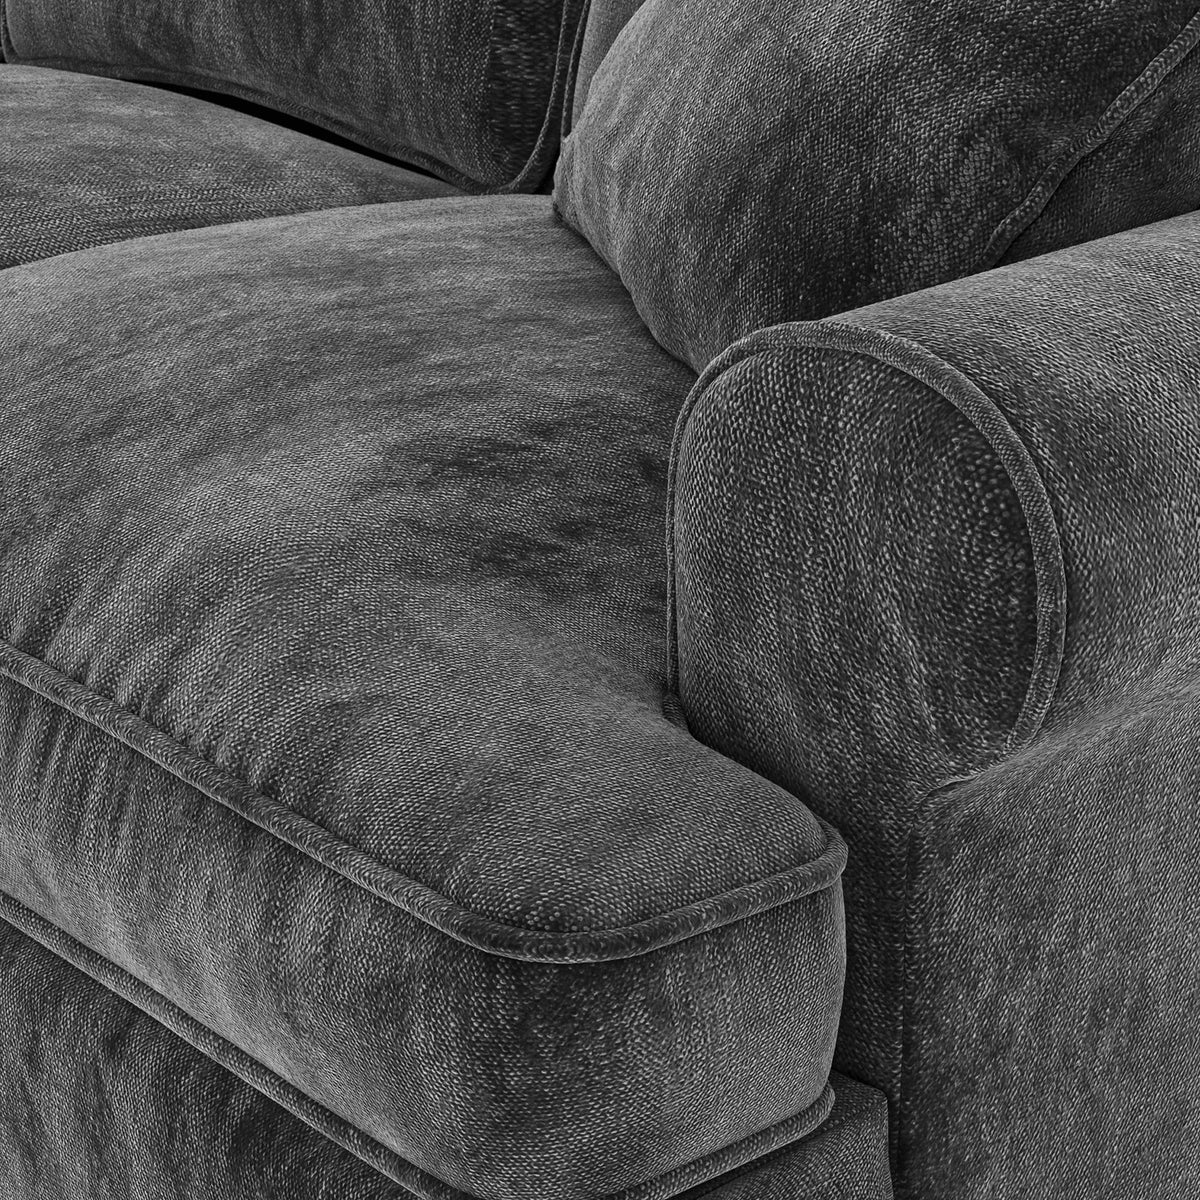 Alfie Charcoal Large Corner Sofa from Roseland Furniture